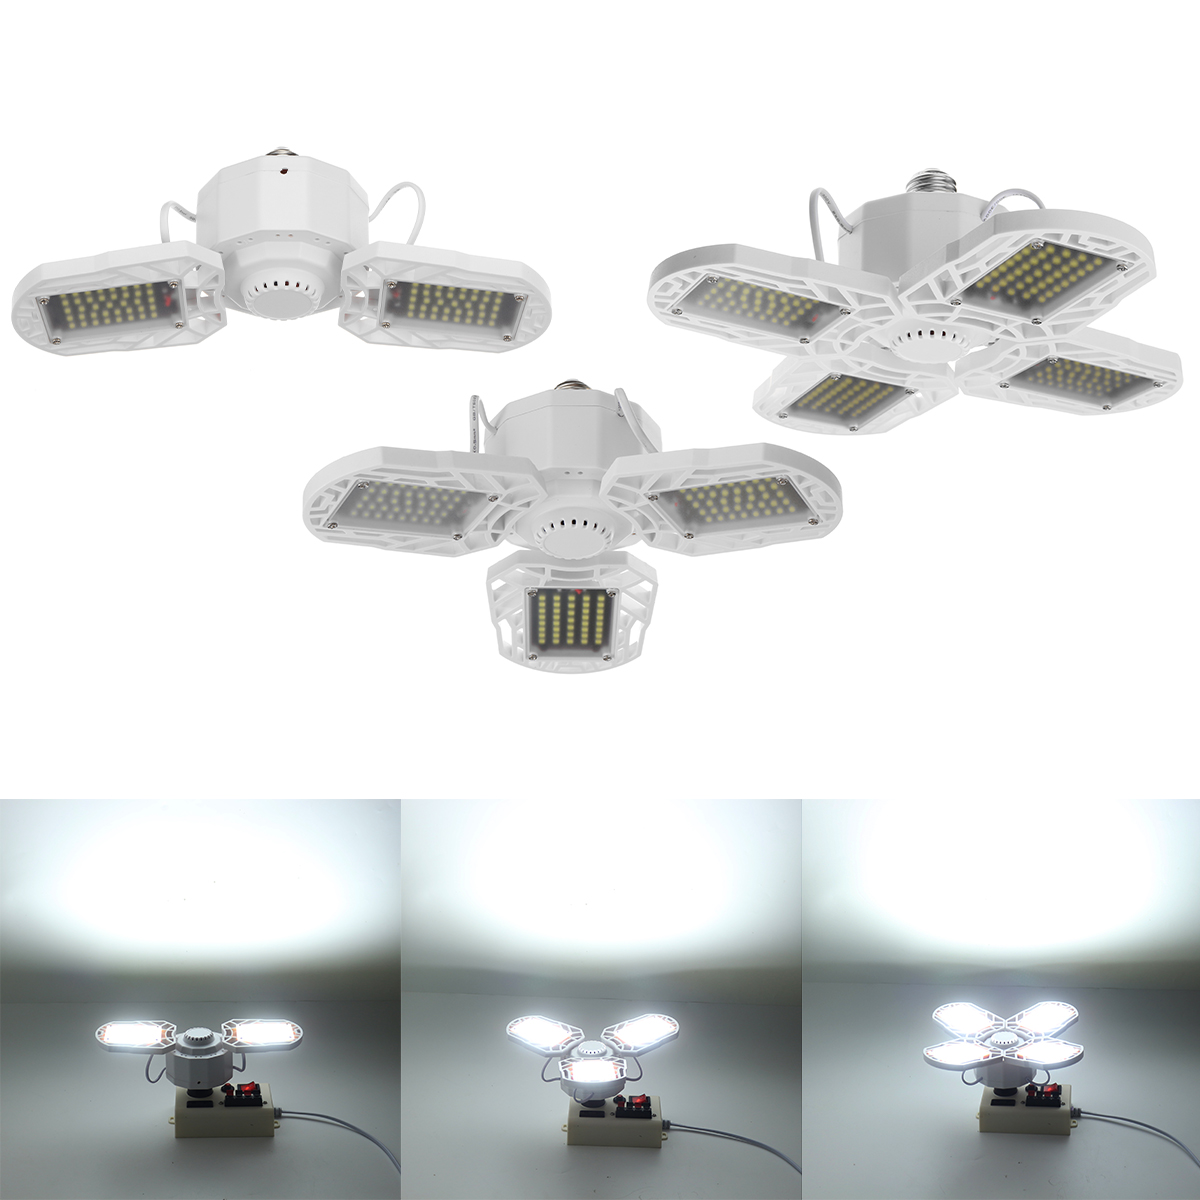 E27-LED-Garage-Light-Bulb-Ceiling-Fixture-Shop-Workshop-Deformable-Lamp-Remote-1710072-10